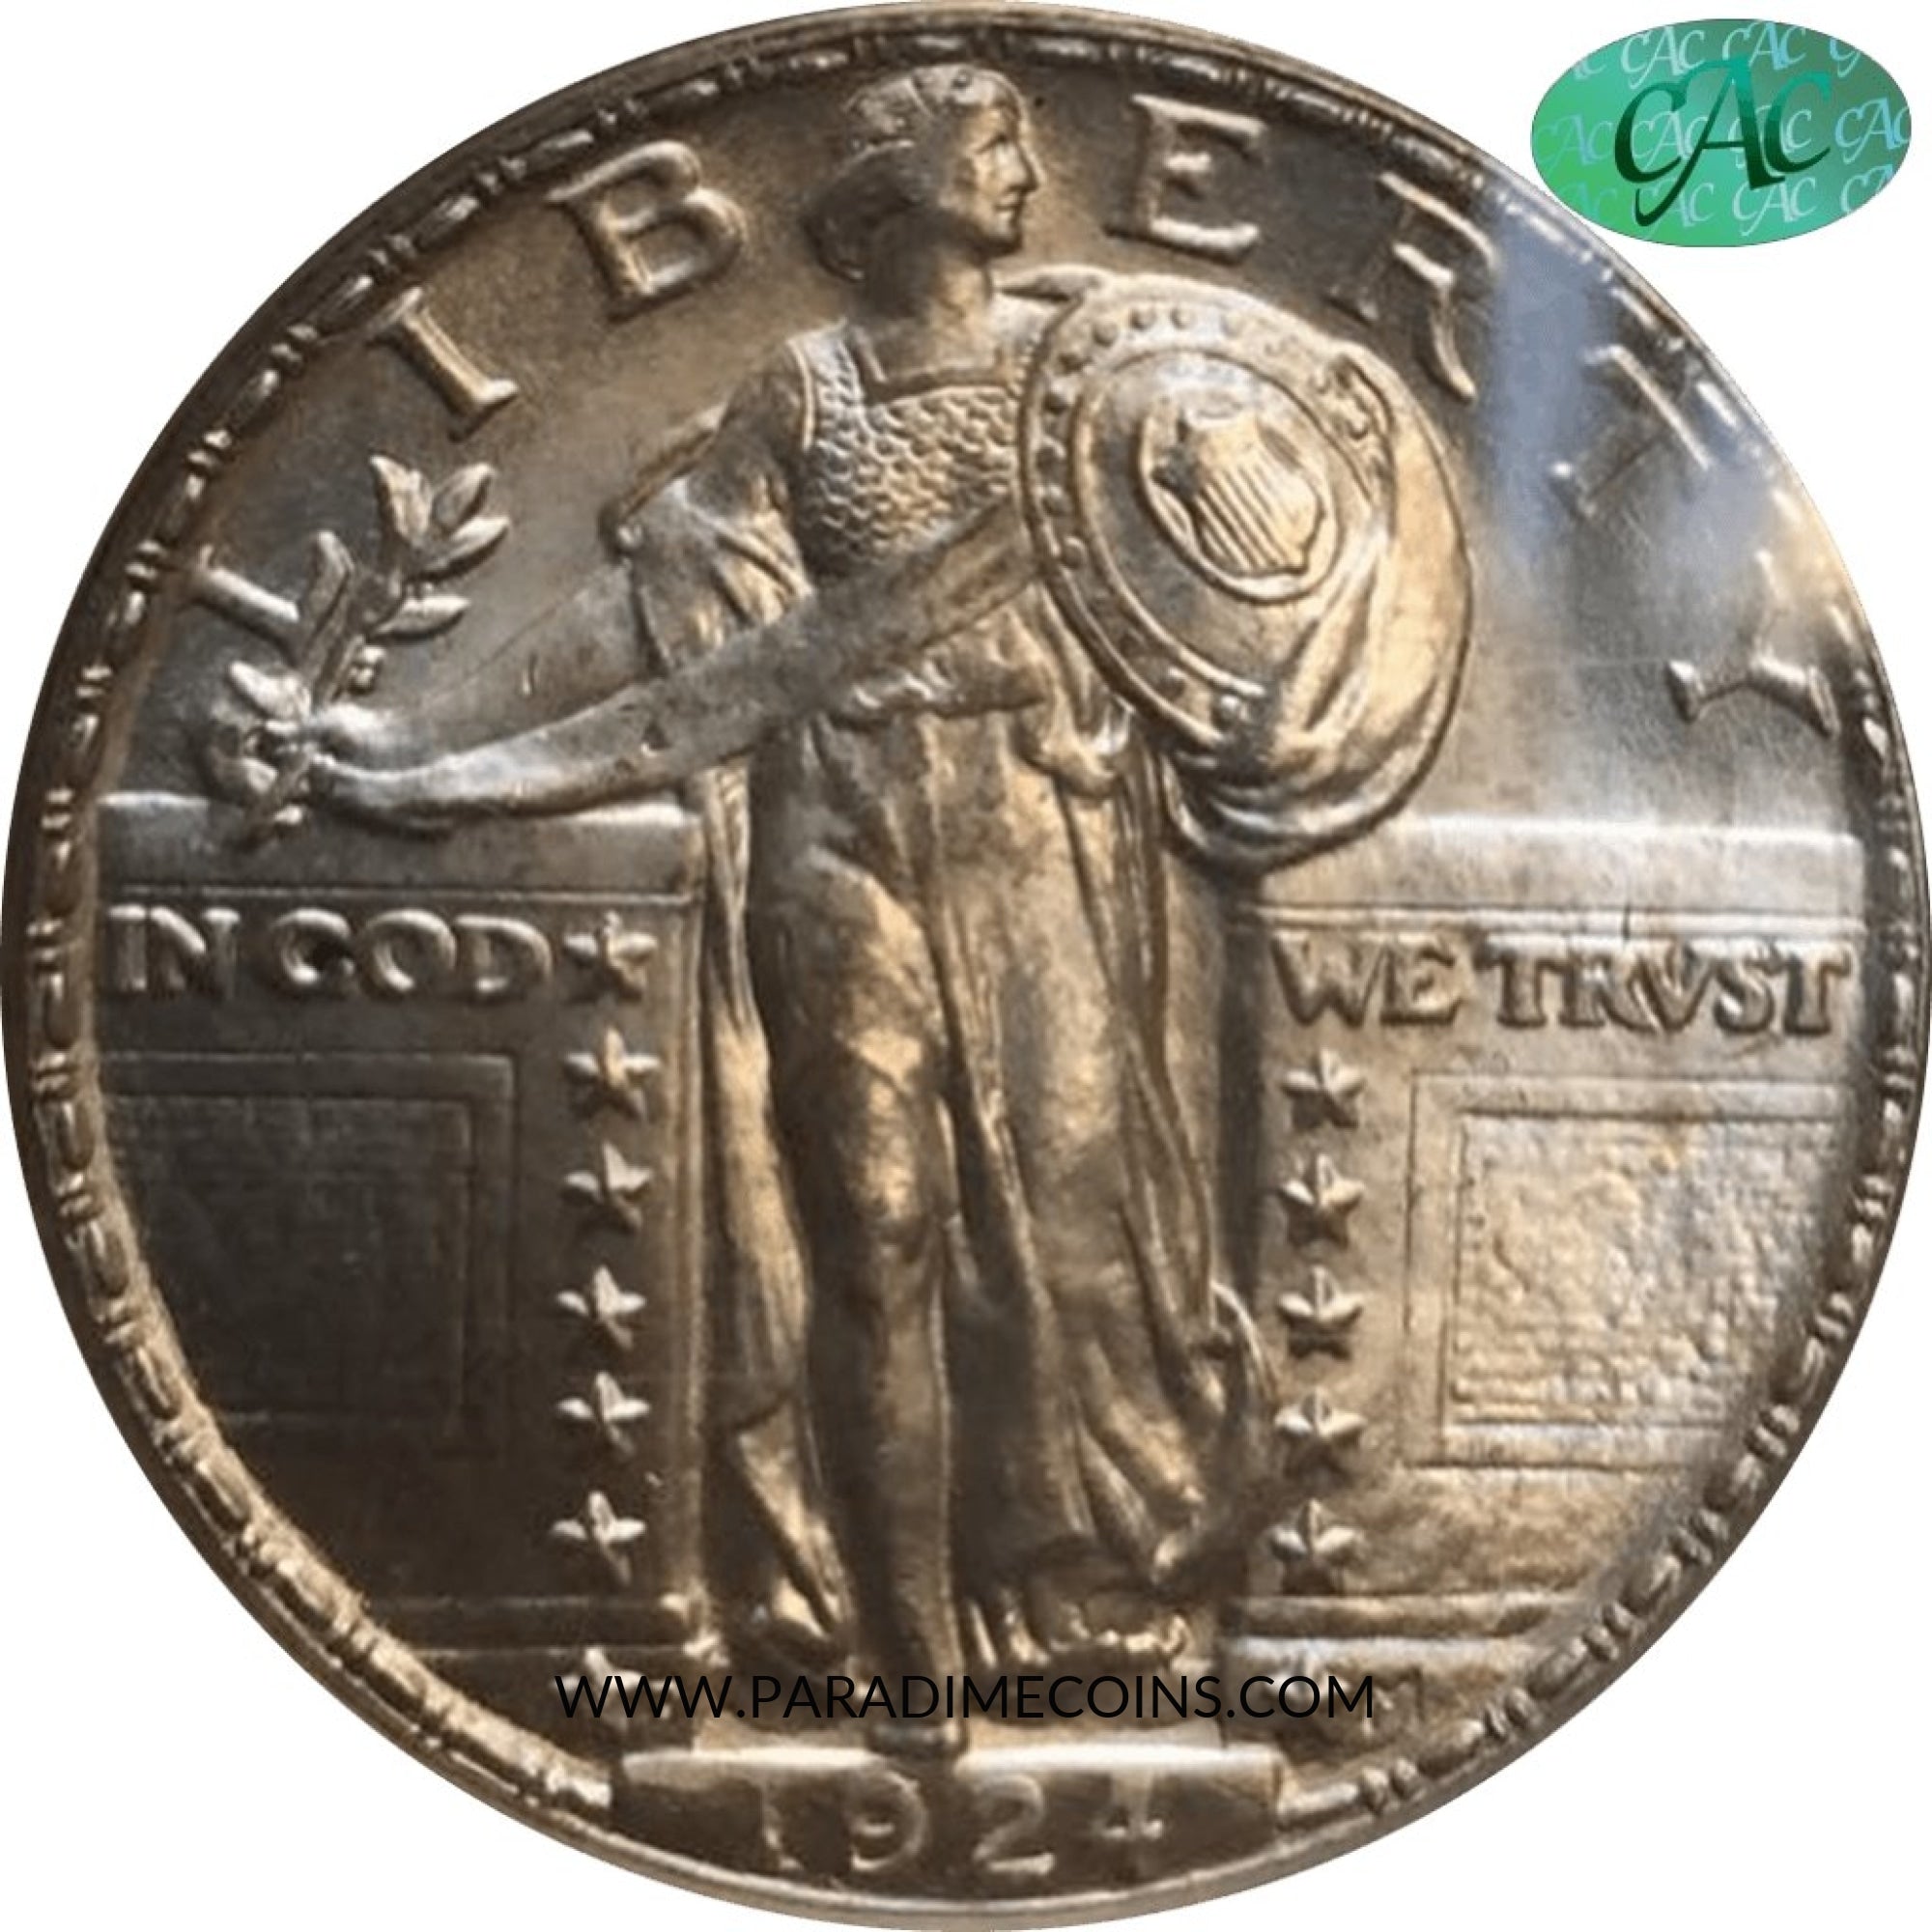 1924-D 25C MS64 PGCS CAC - Paradime Coins | PCGS NGC CACG CAC Rare US Numismatic Coins For Sale